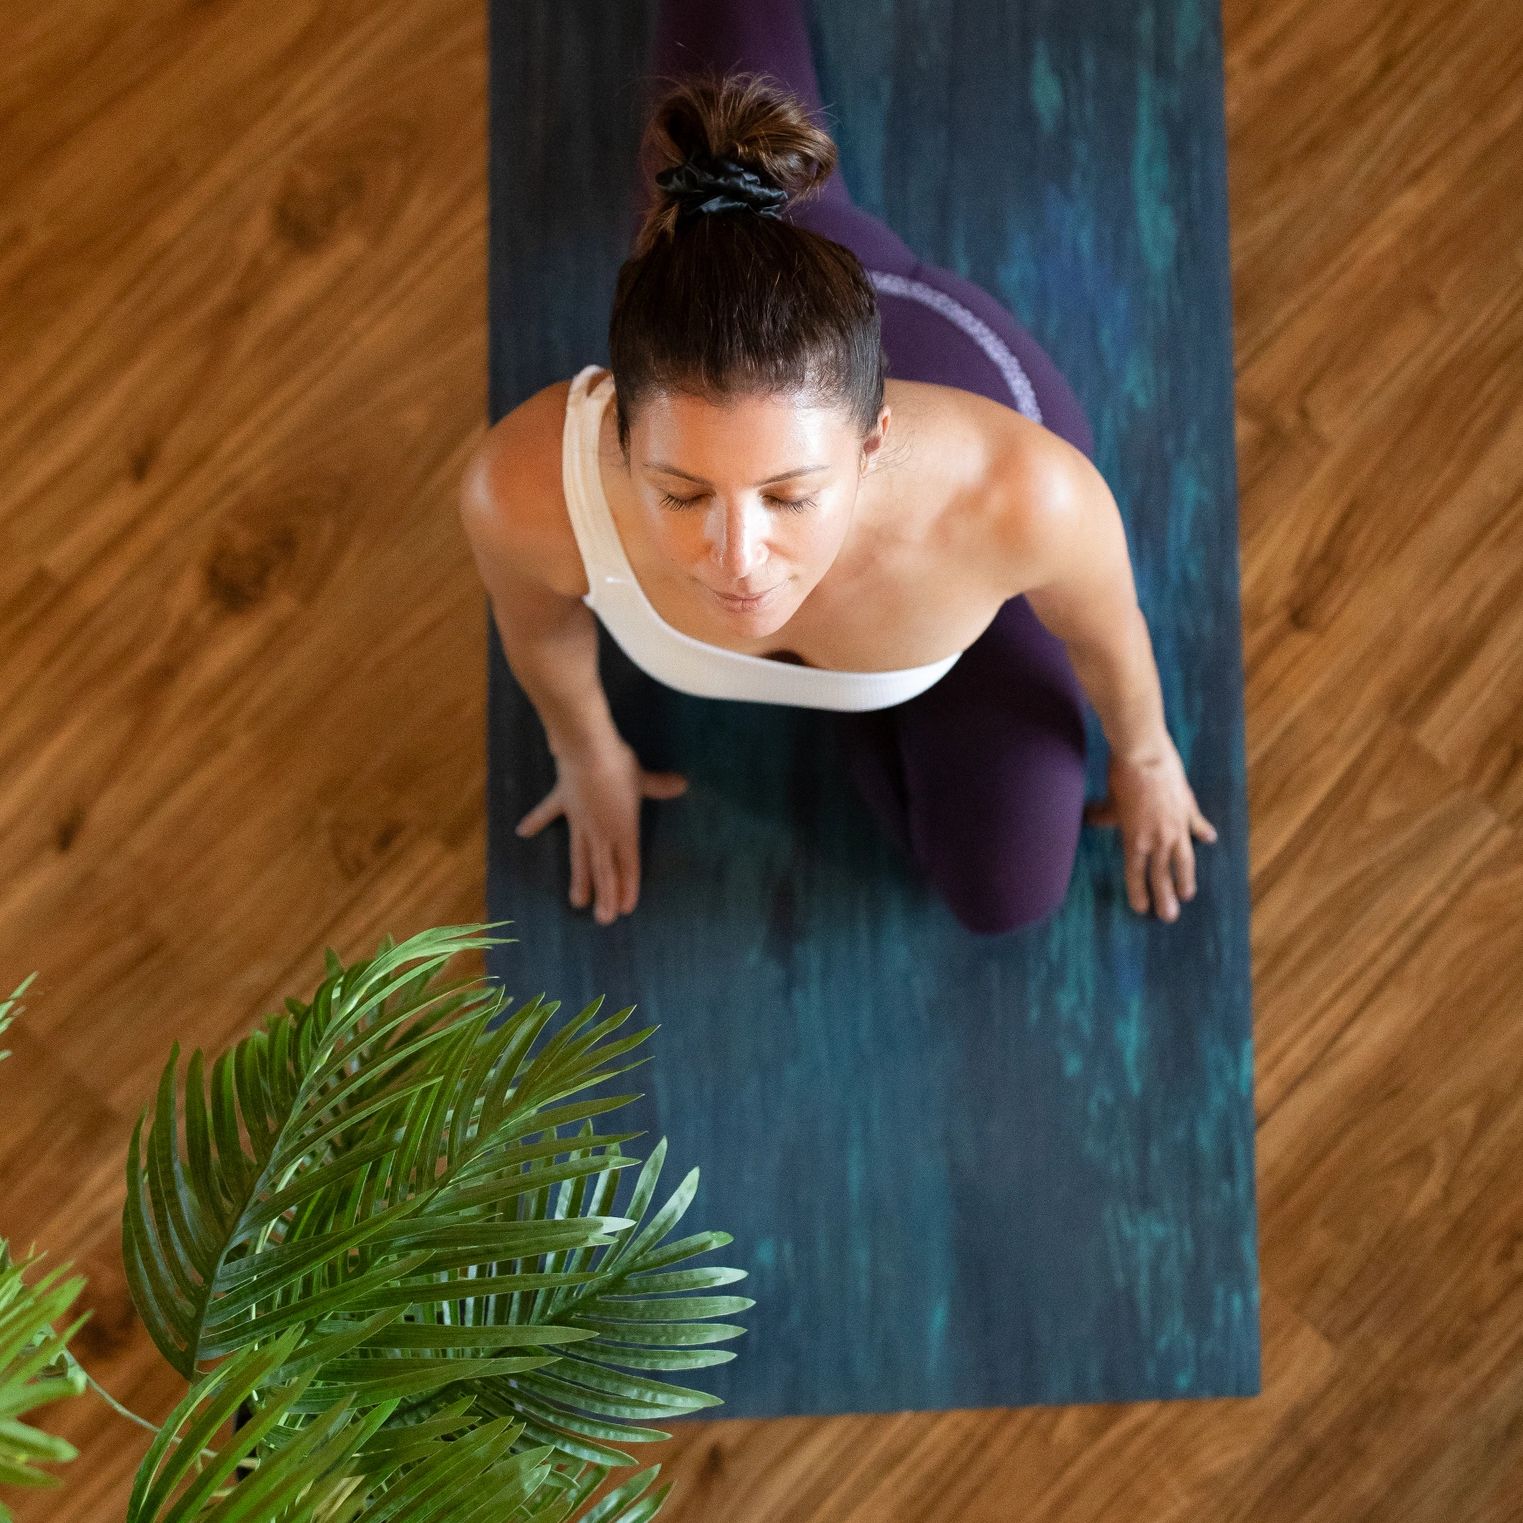 The Great Yoga Wall - Yoga Santosha